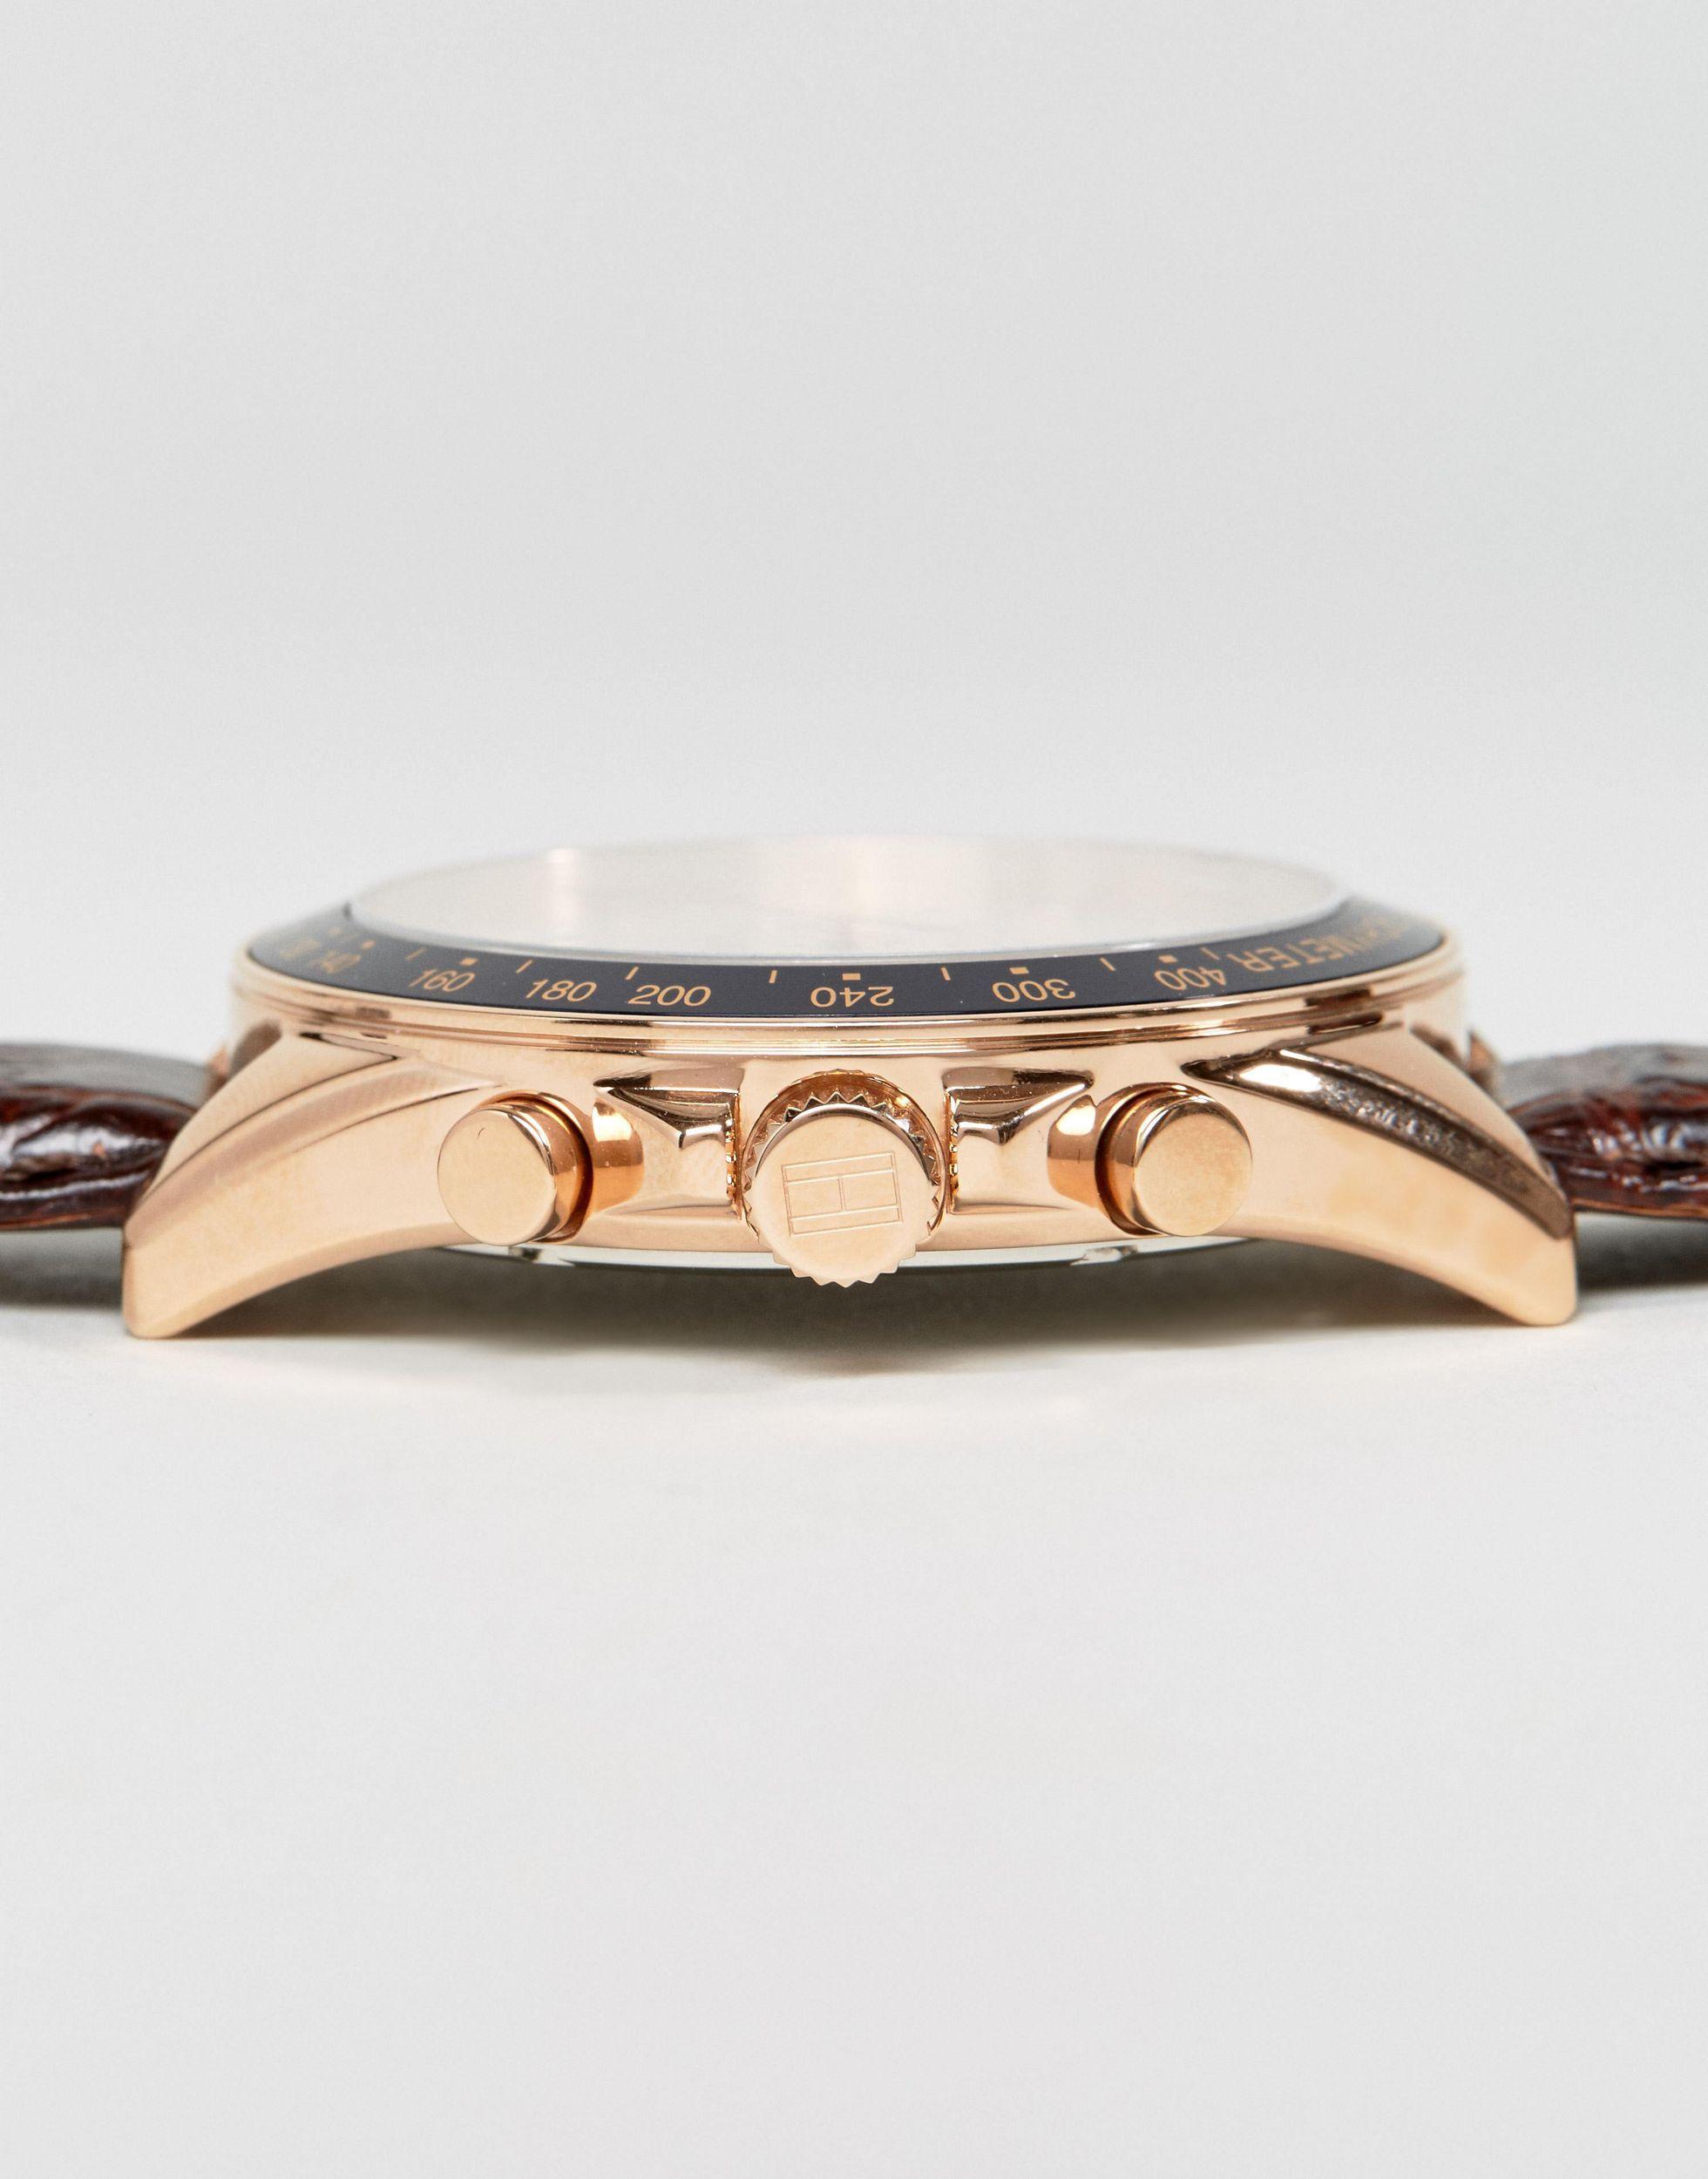 tommy hilfiger luke leather strap watch 1791118